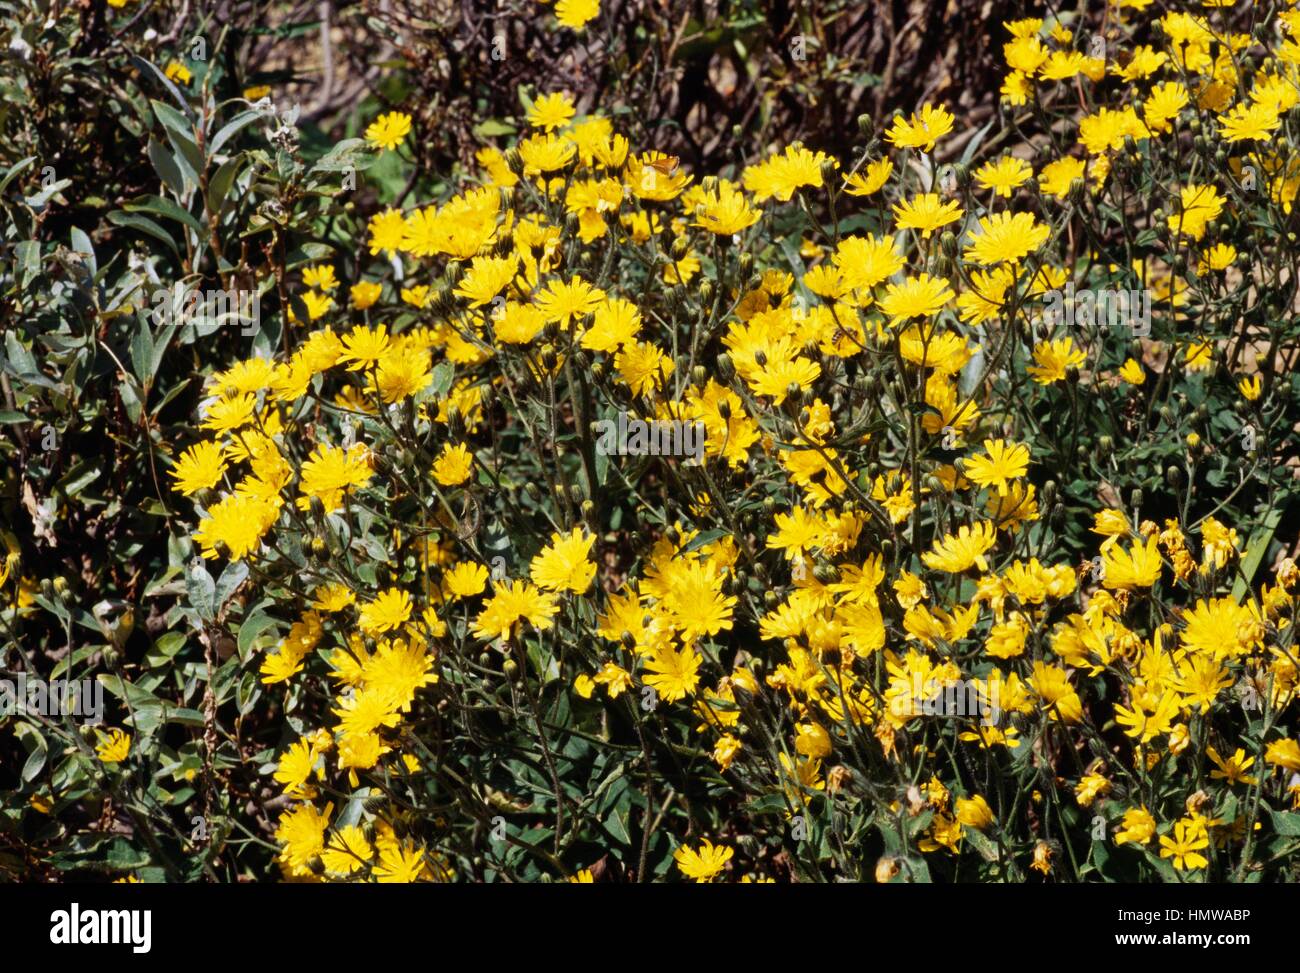 Northern hawk's-beard (Crepis mollis), Asteraceae. Stock Photo